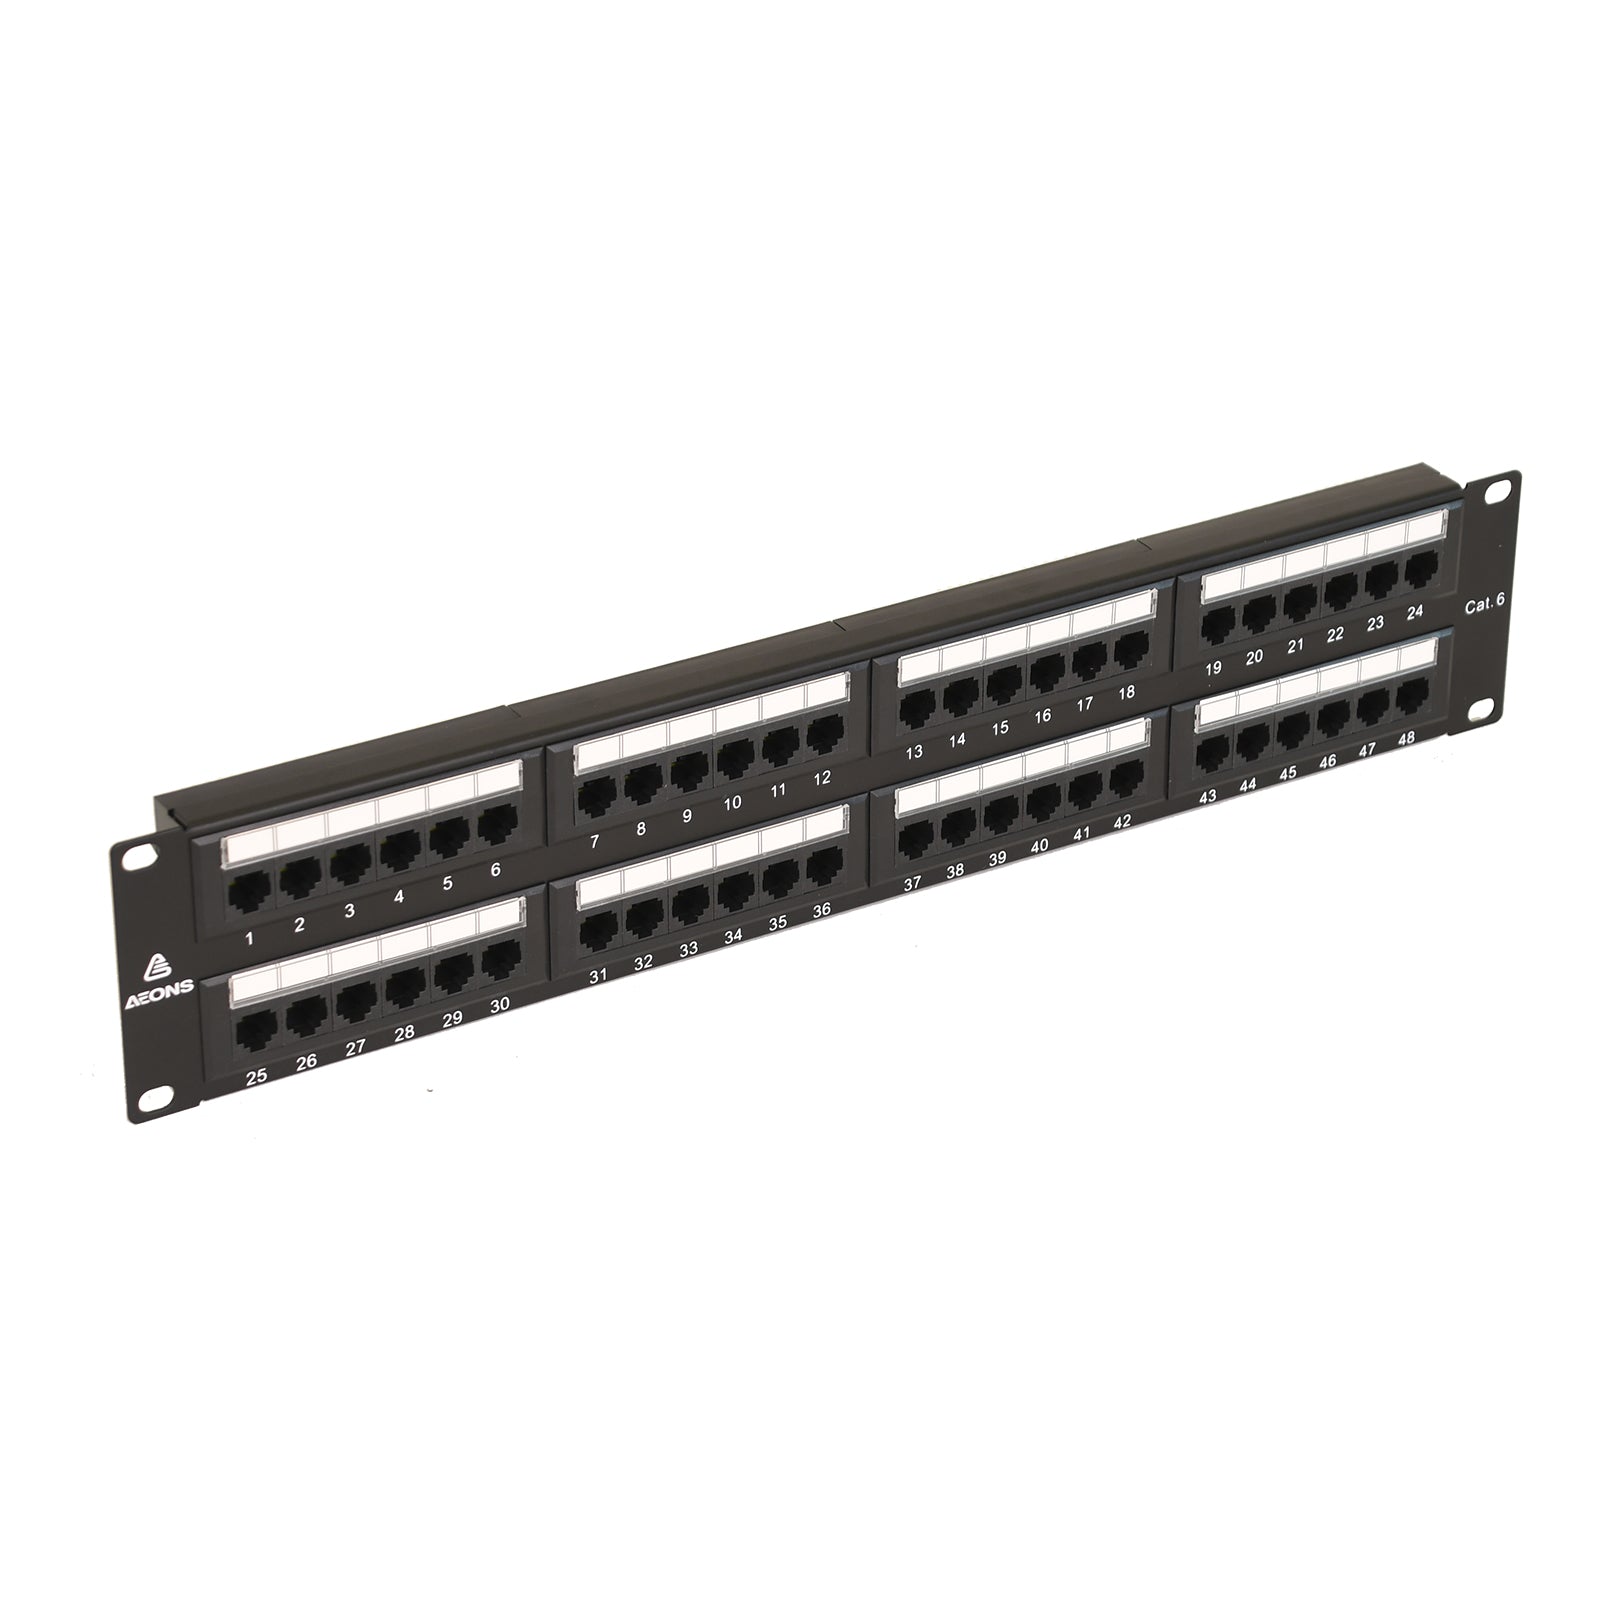 Aeons 48-Port CAT6 UTP Patch Panel, 2U 19-inch Rack Mount Keystone RJ45 Cat 5/5e/6 Gigabit/Fast Ethernet, Cable Management Bar, Black